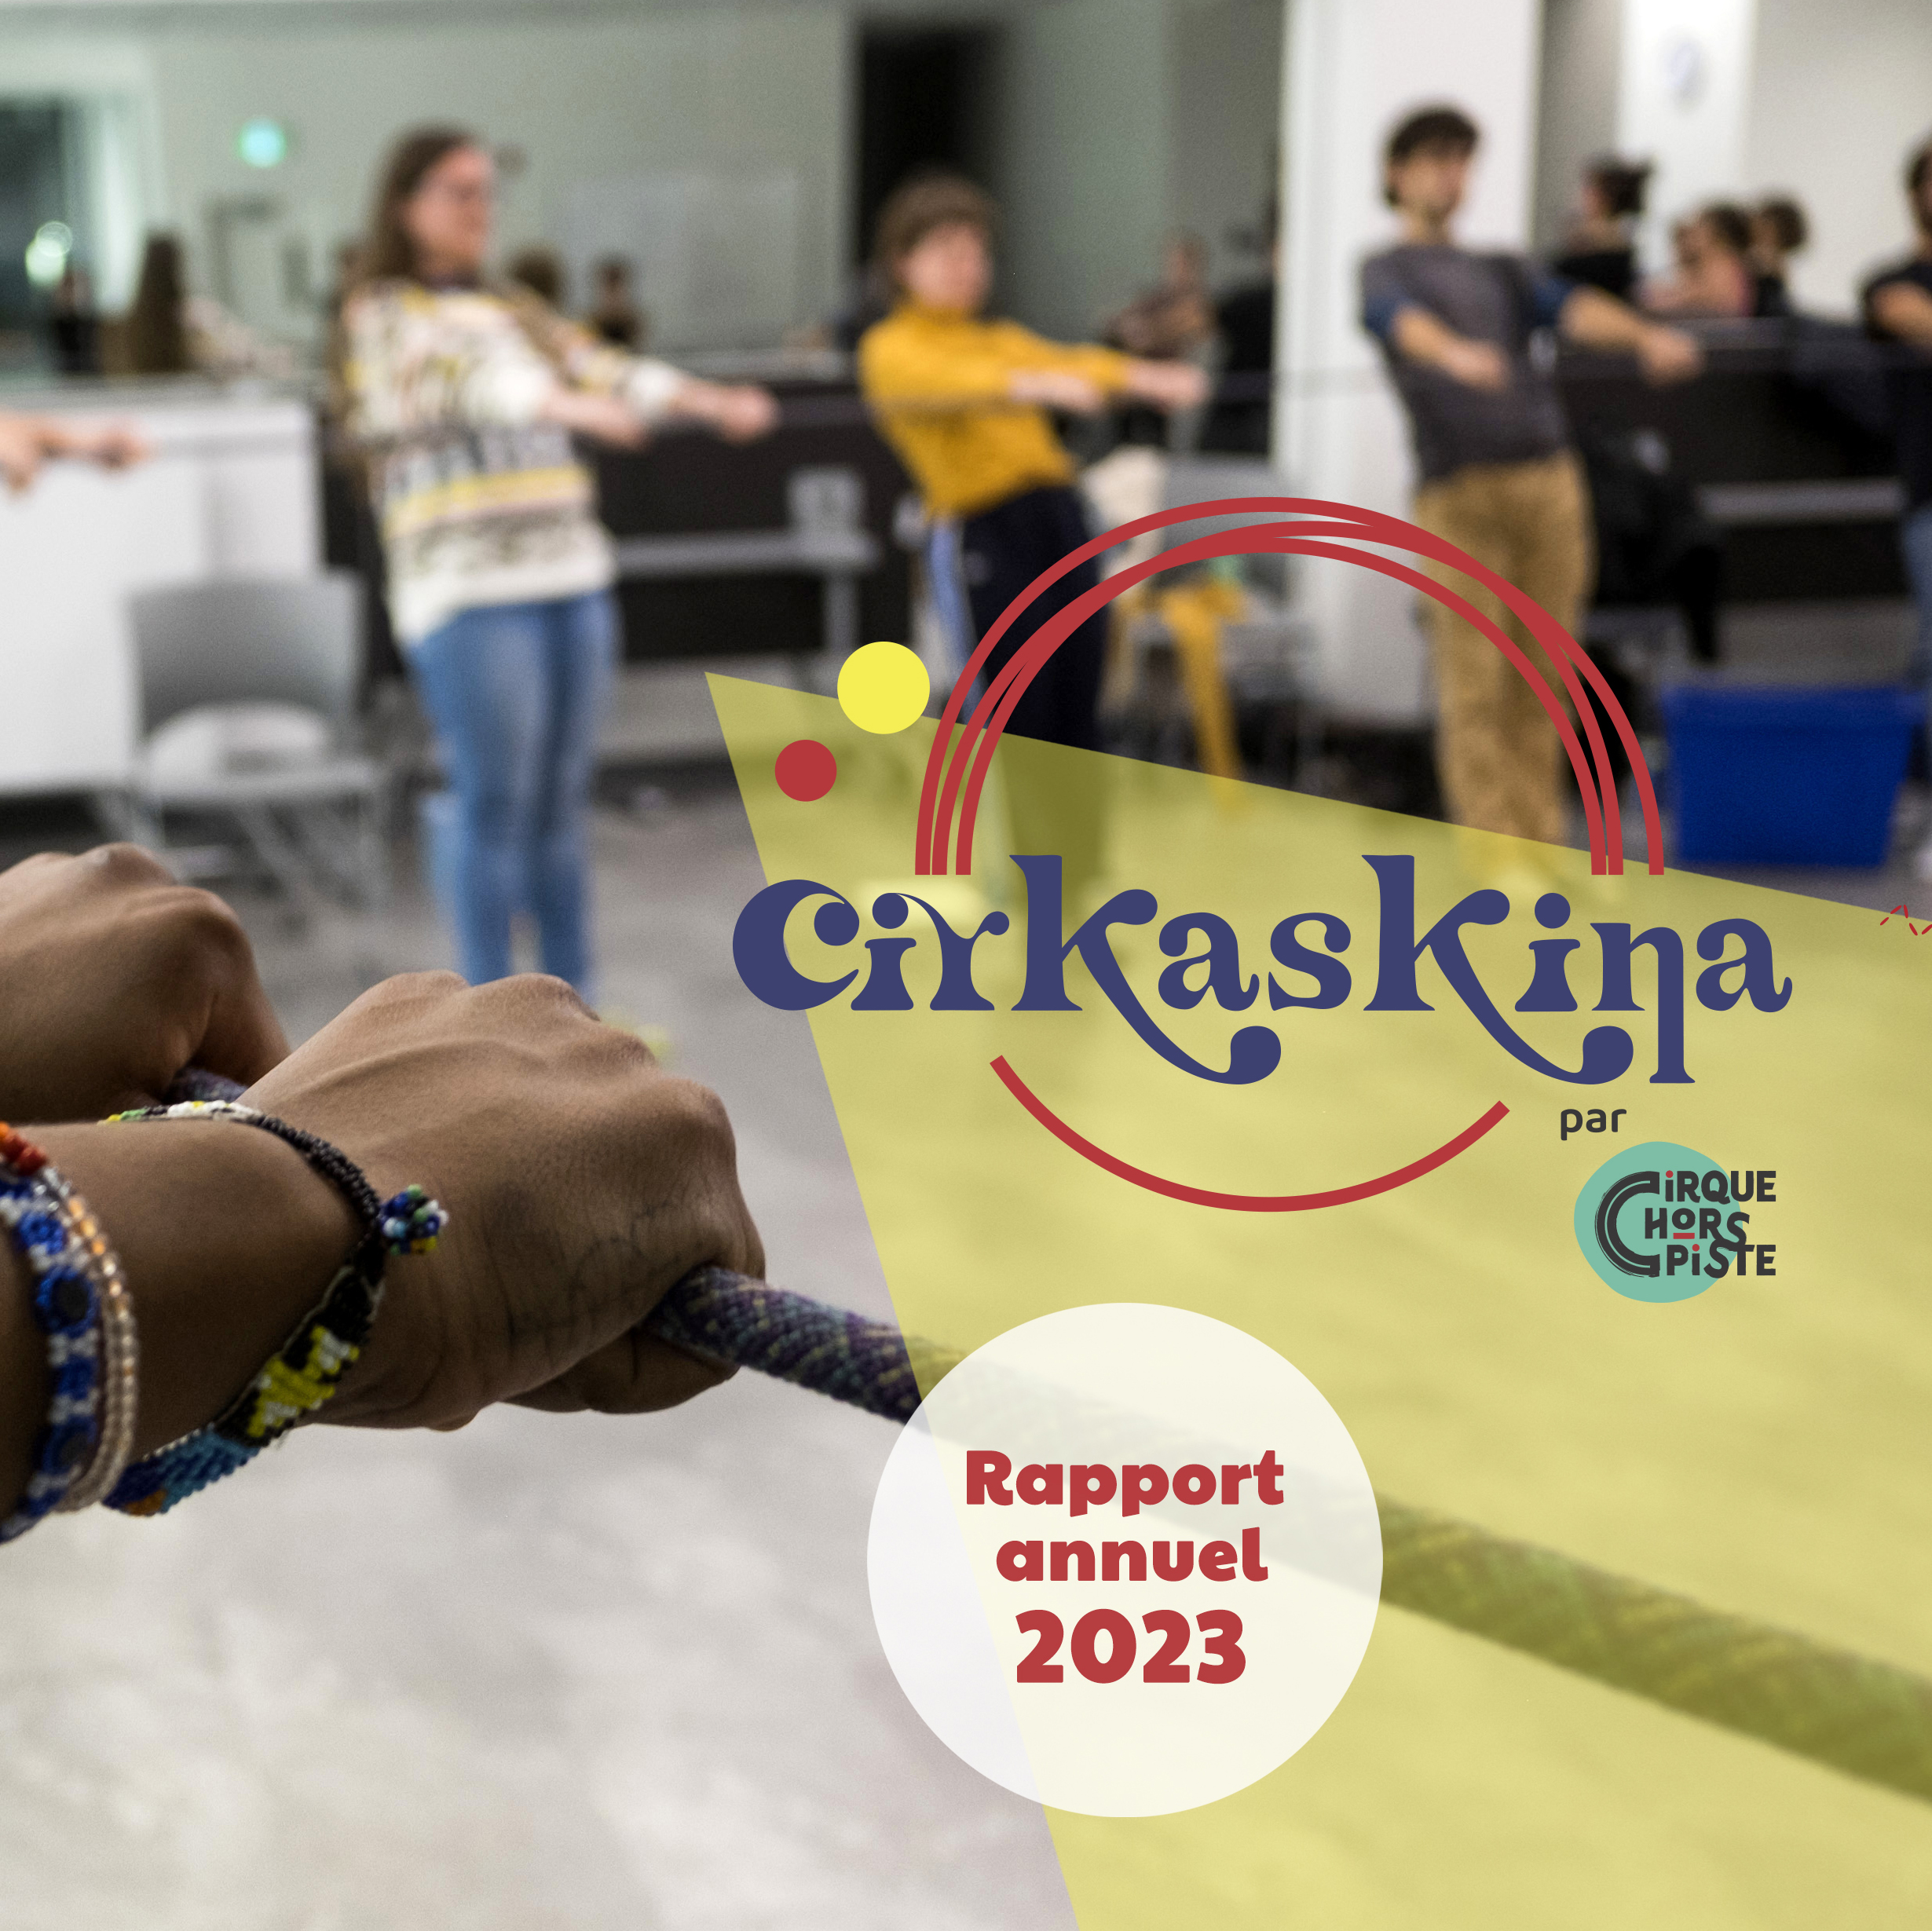 Rapport annuel Cirkaskina 2023